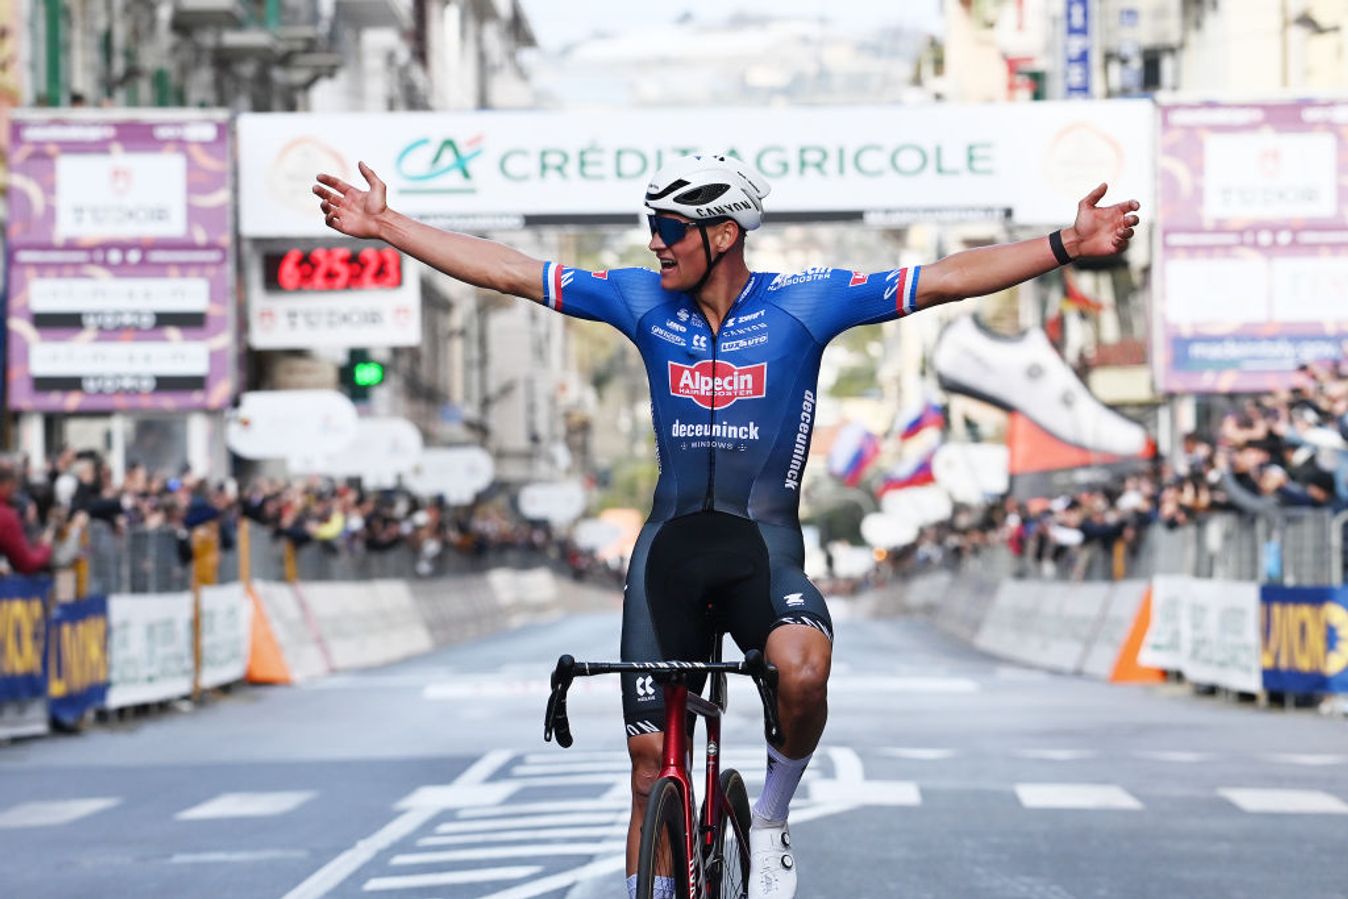 Mathieu van der Poel won the 2023 Milan-San Remo with a solo attack